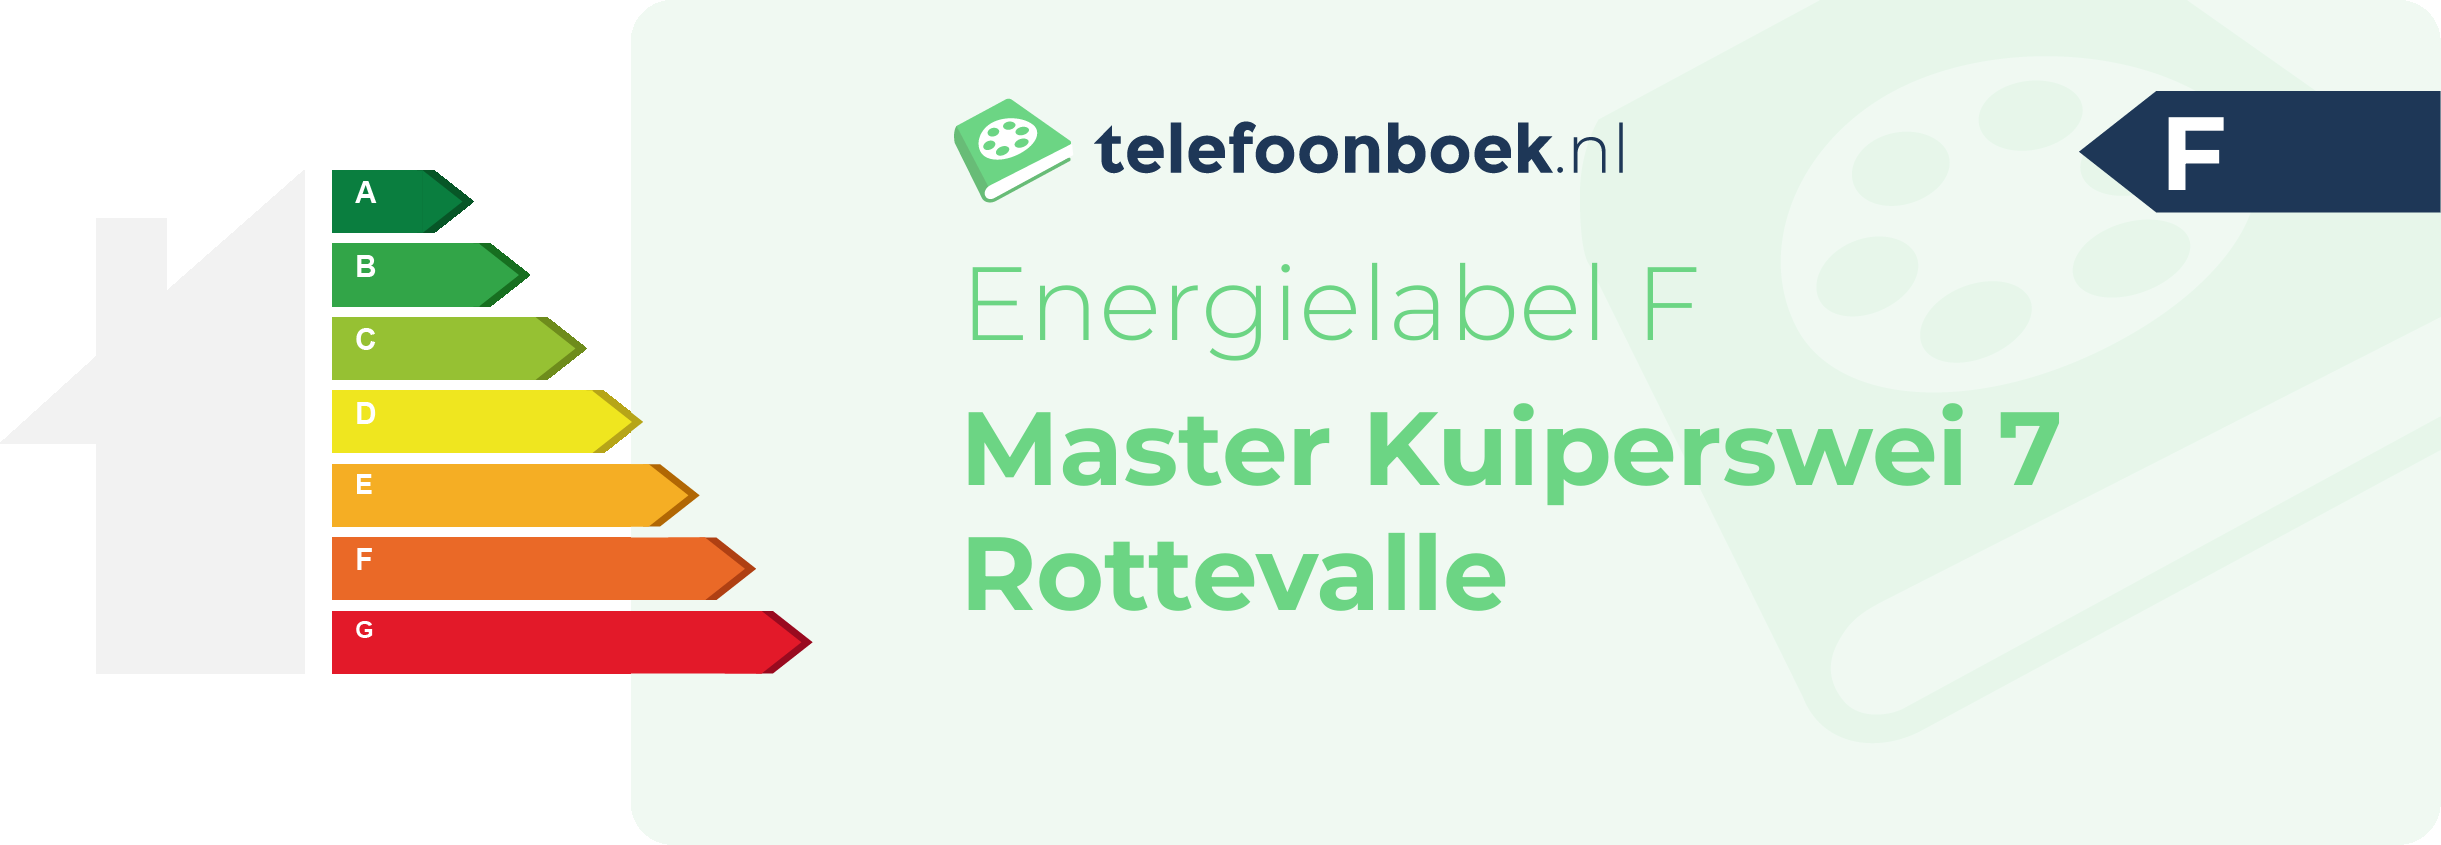 Energielabel Master Kuiperswei 7 Rottevalle